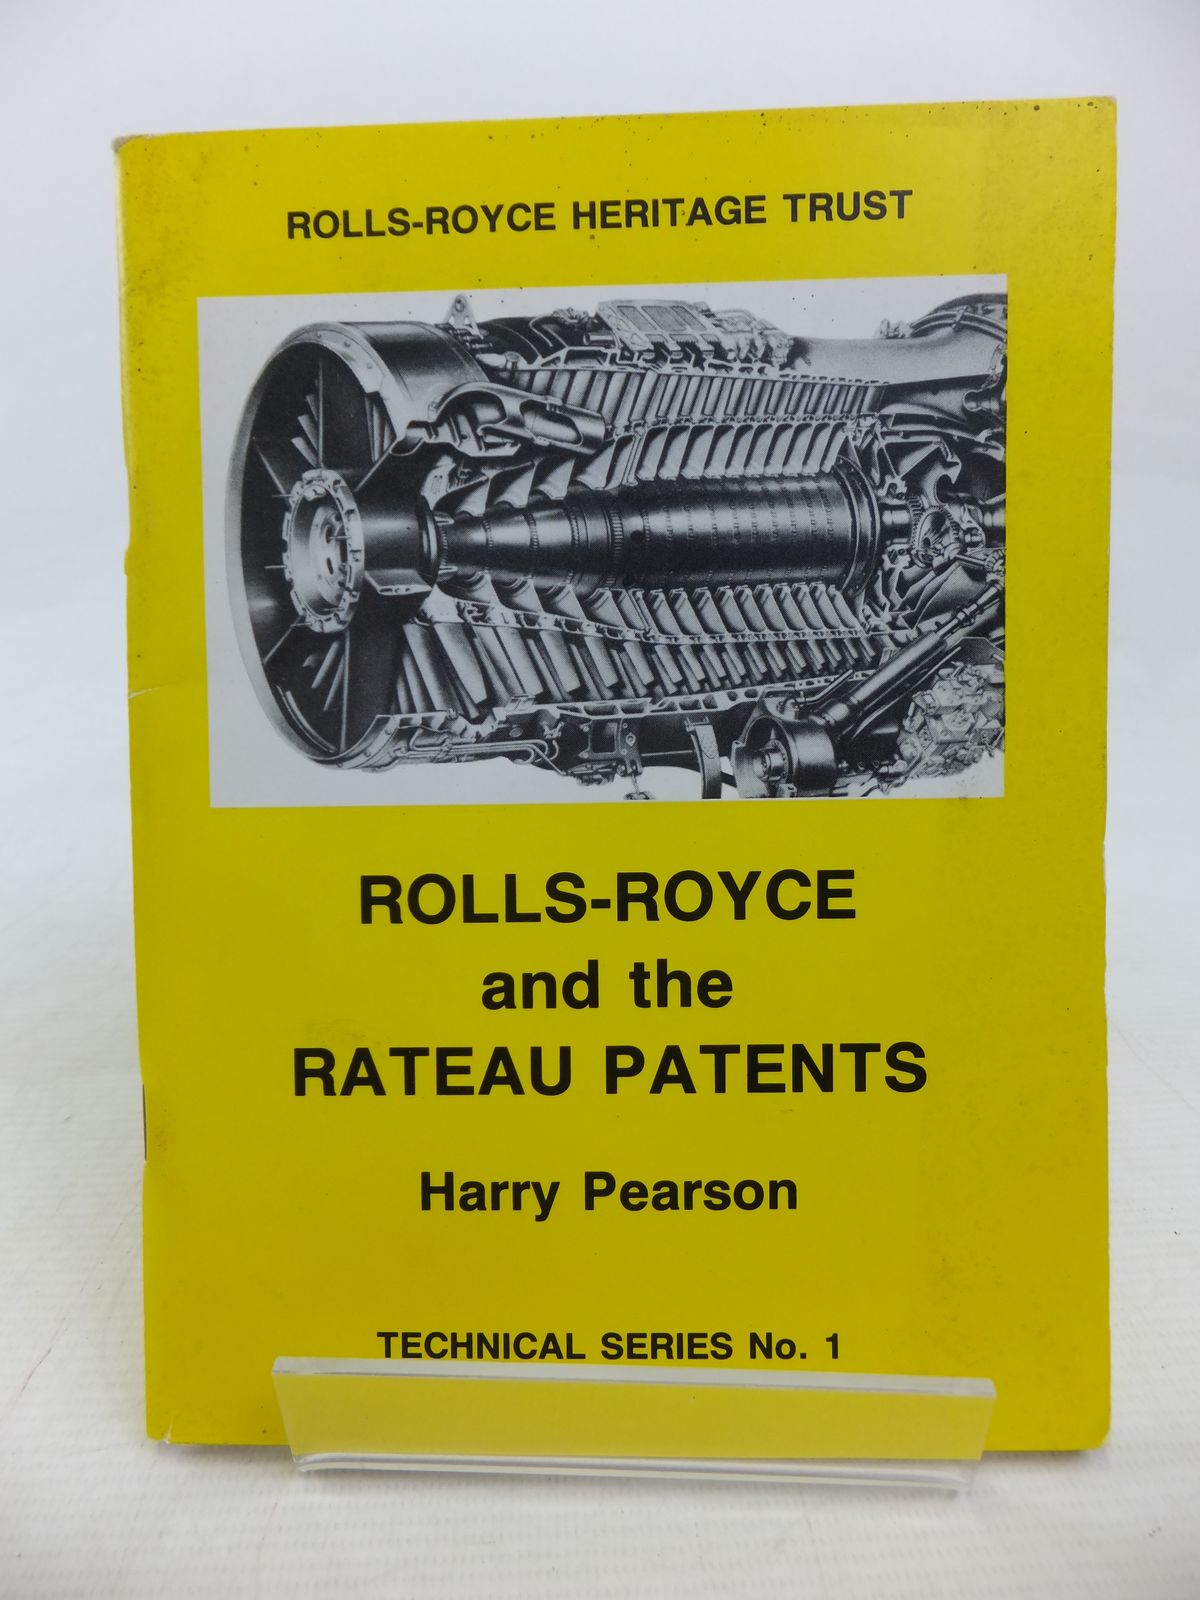 Rolls royce jet engine book 6th edition pdf free download